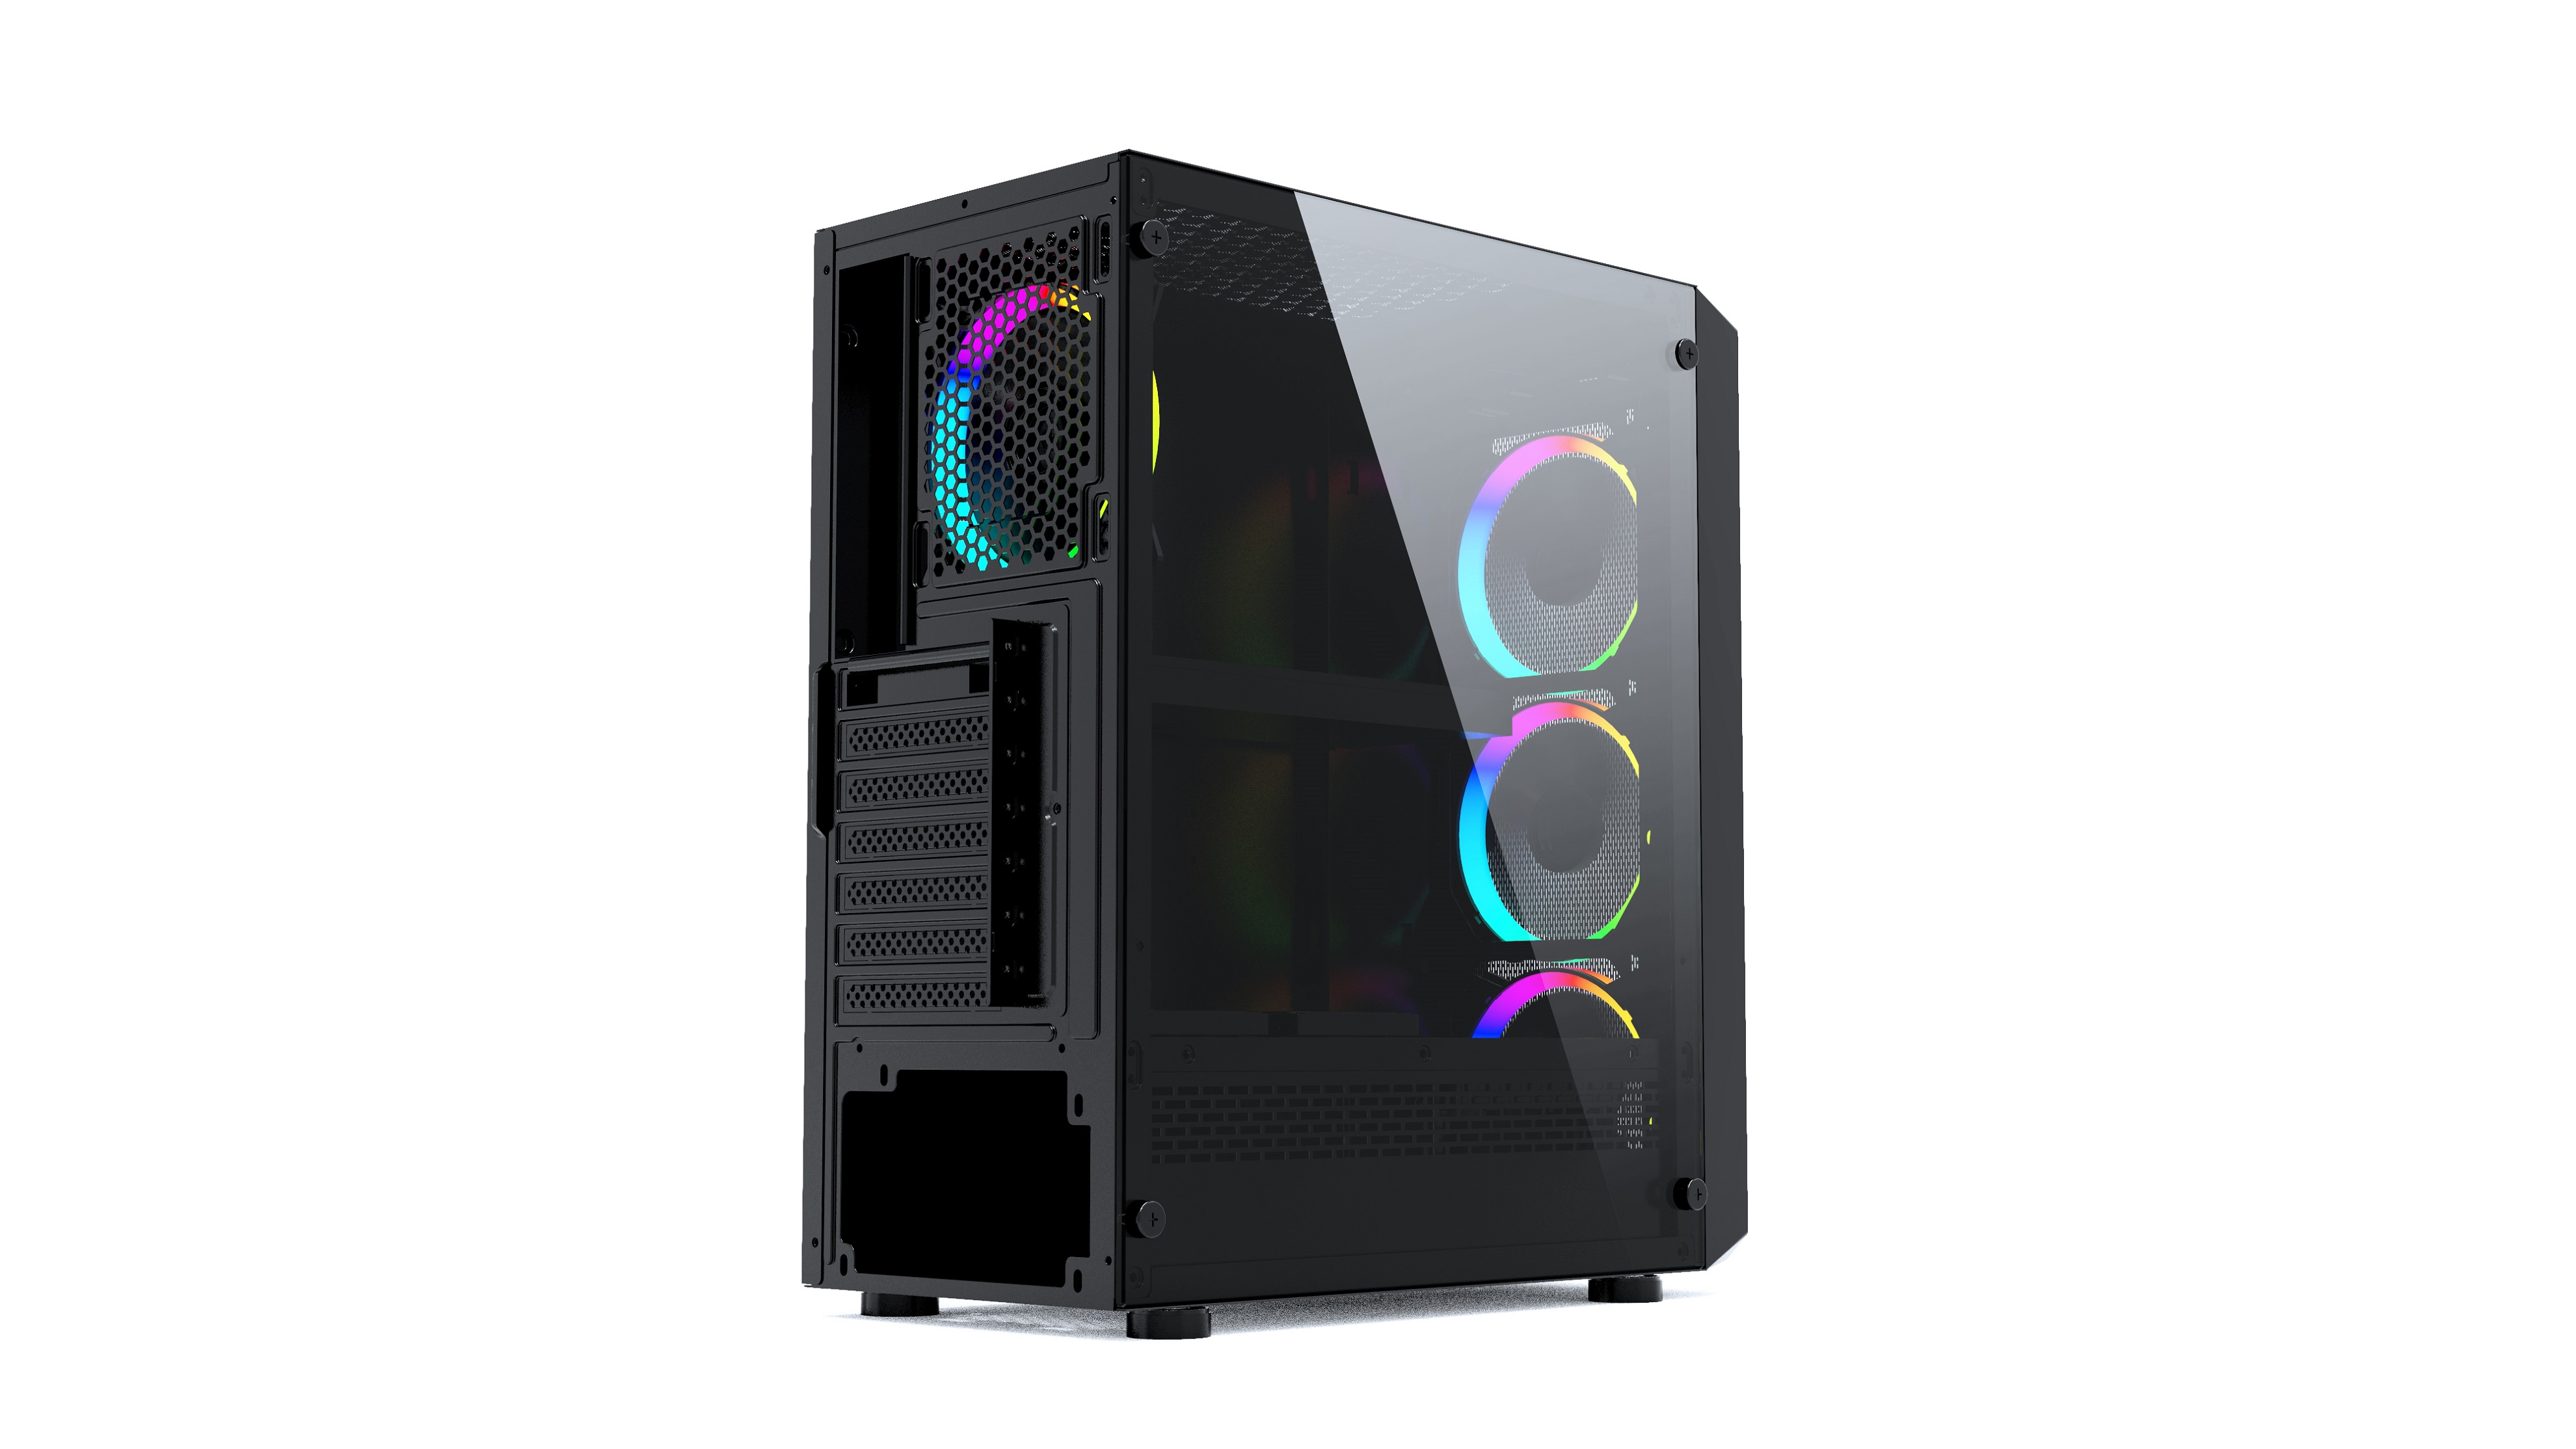 Корпус Powercase Mistral Z4 Mesh LED, Tempered Glass, 4x 120mm 5-color fan, чёрный, ATX  (CMIZB-L4)